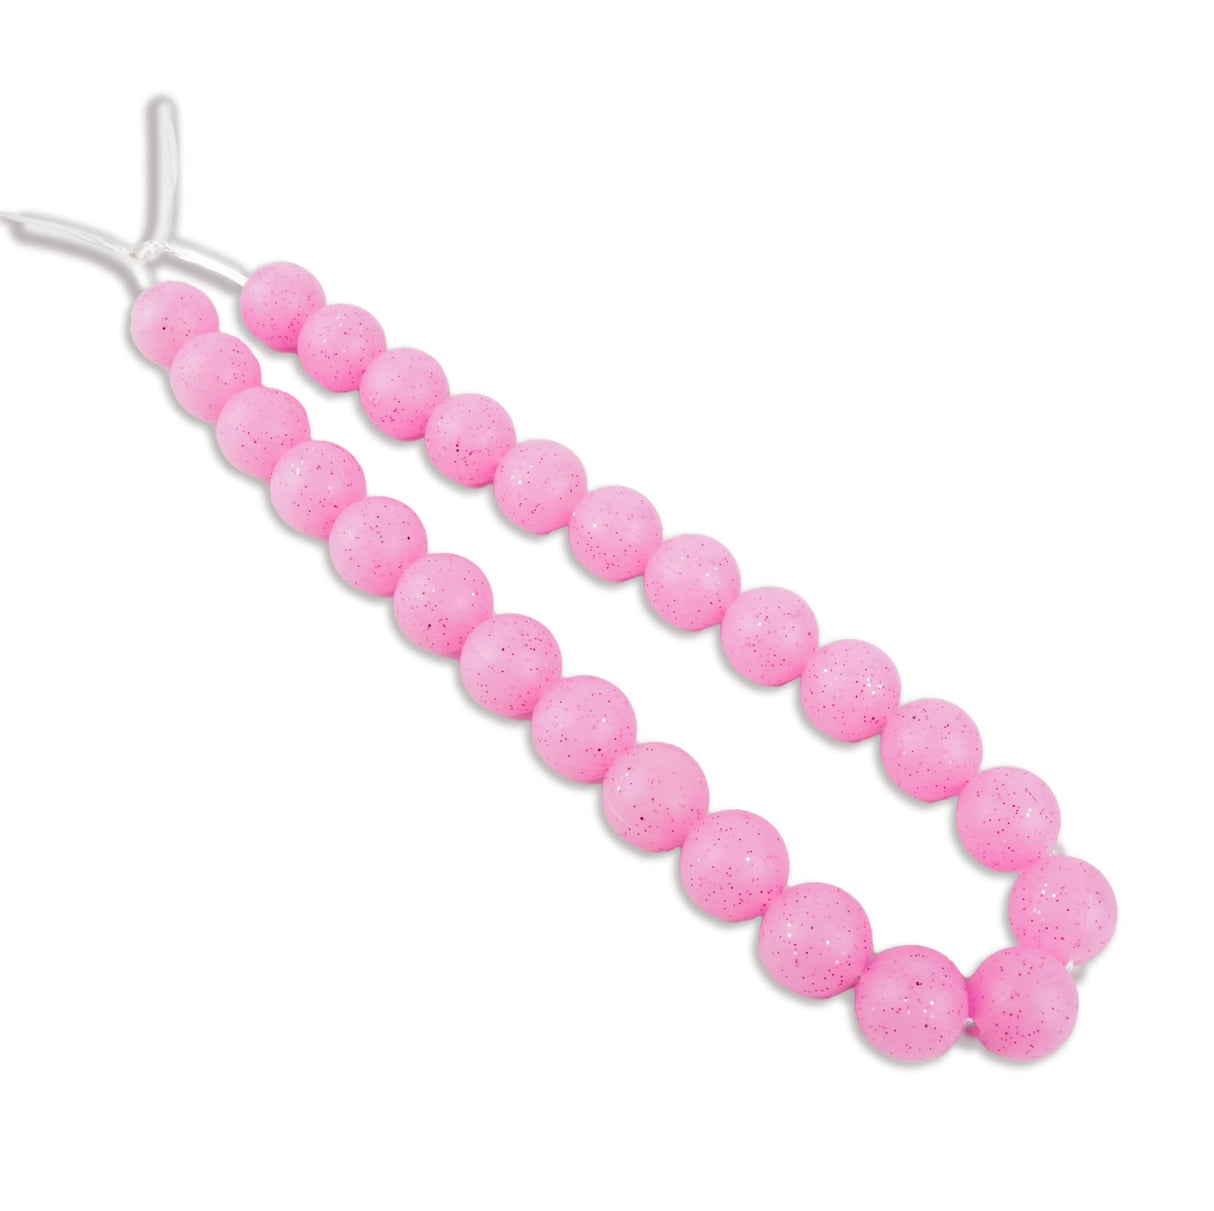 silicone bead round glitter pink